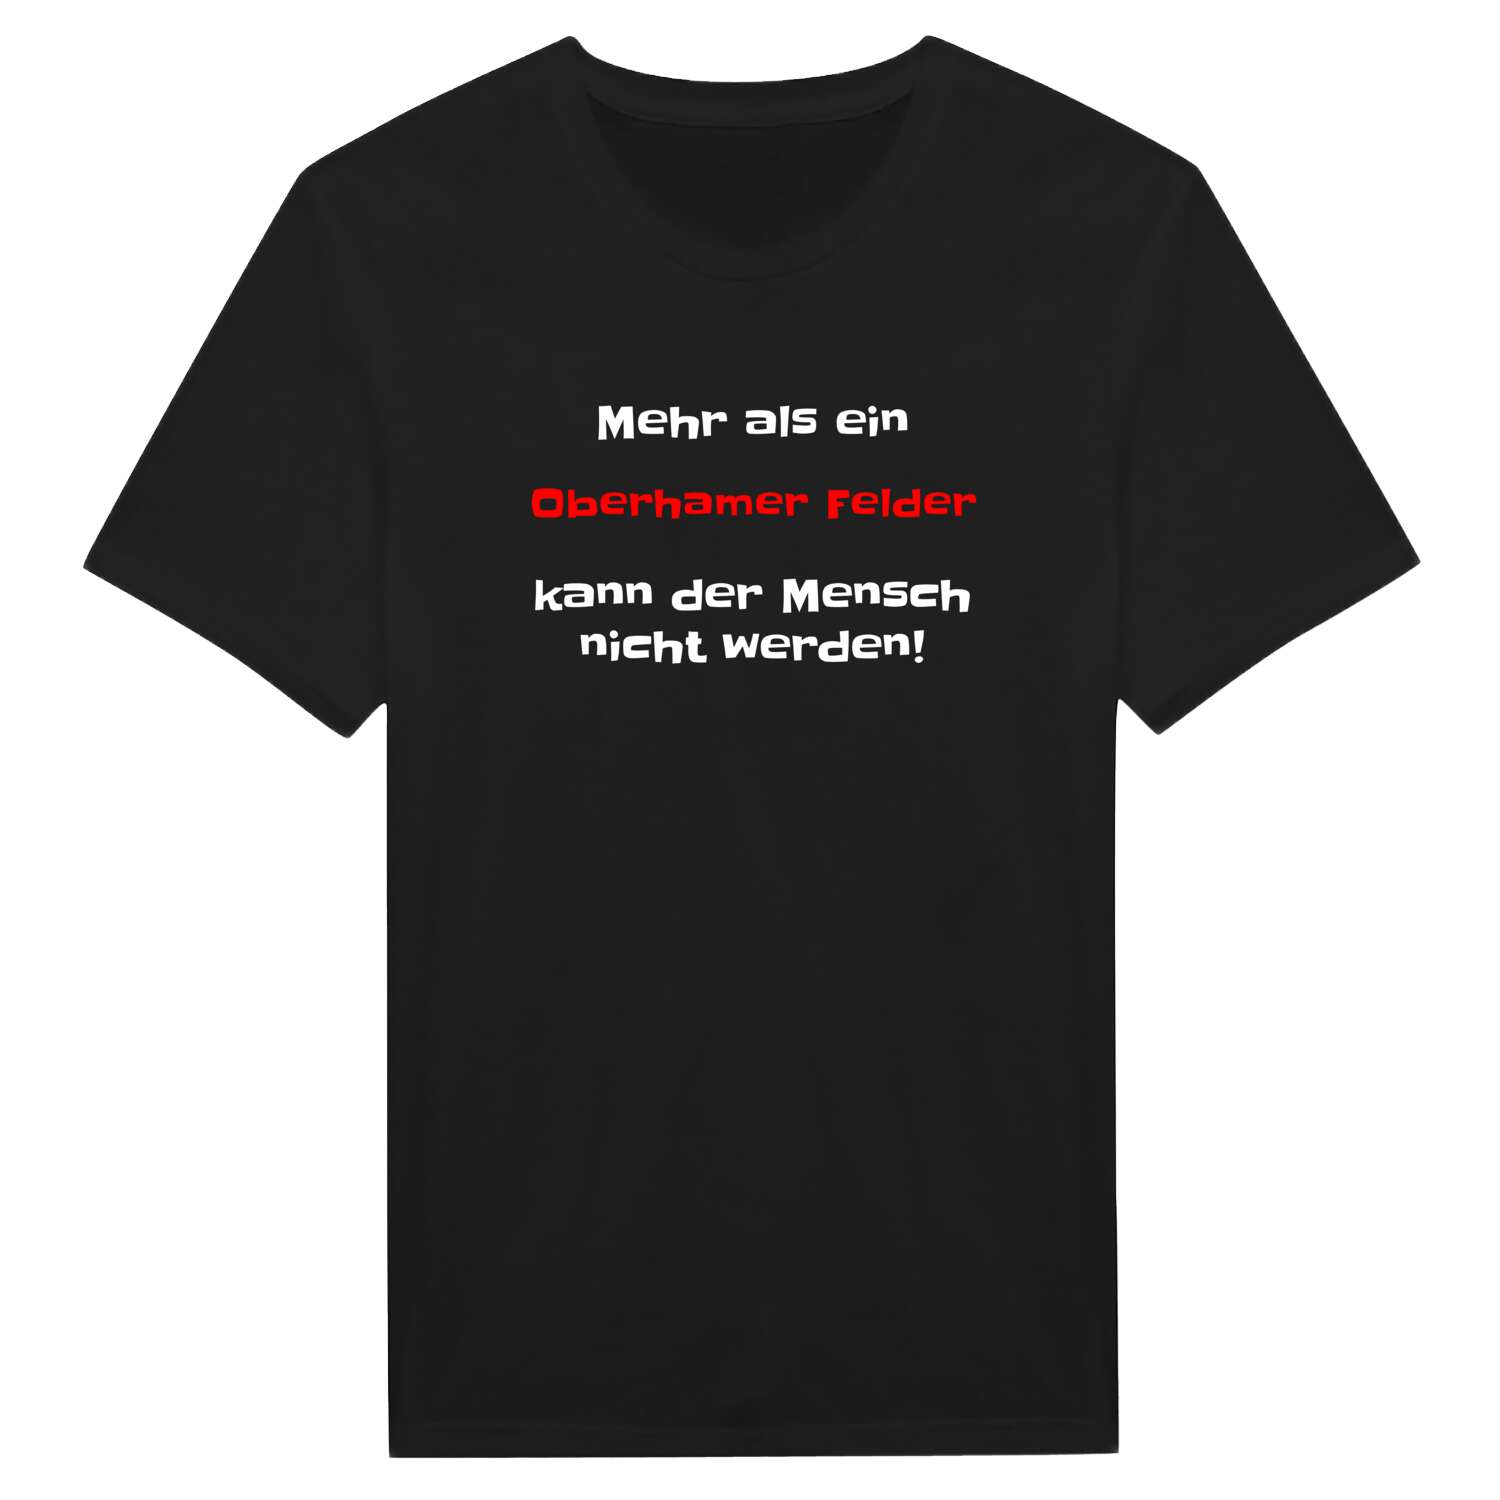 Oberhamer Feld T-Shirt »Mehr als ein«